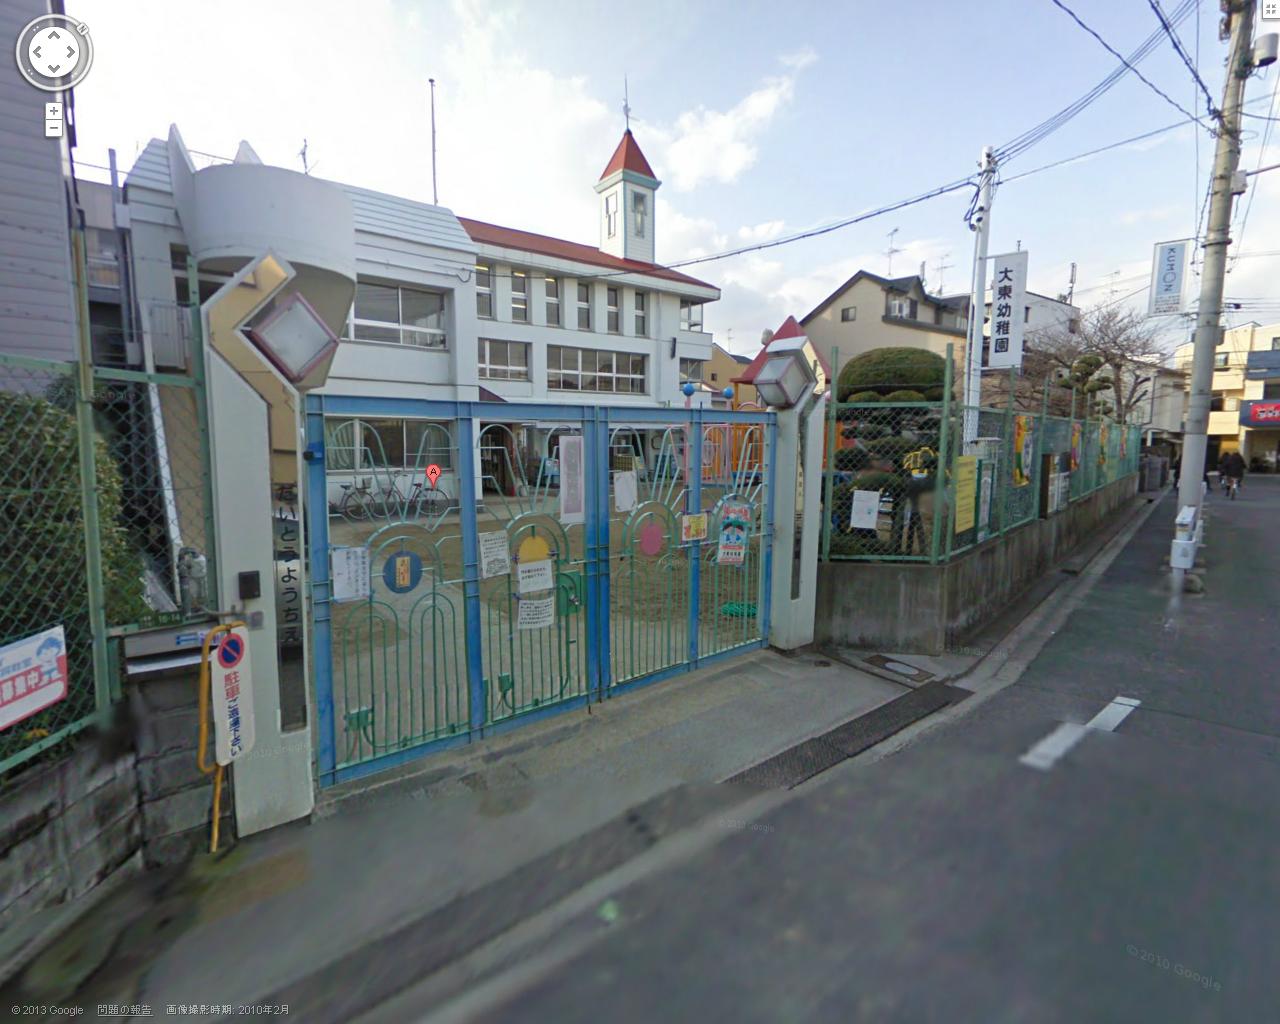 kindergarten ・ Nursery. Daito kindergarten (kindergarten ・ 619m to the nursery)